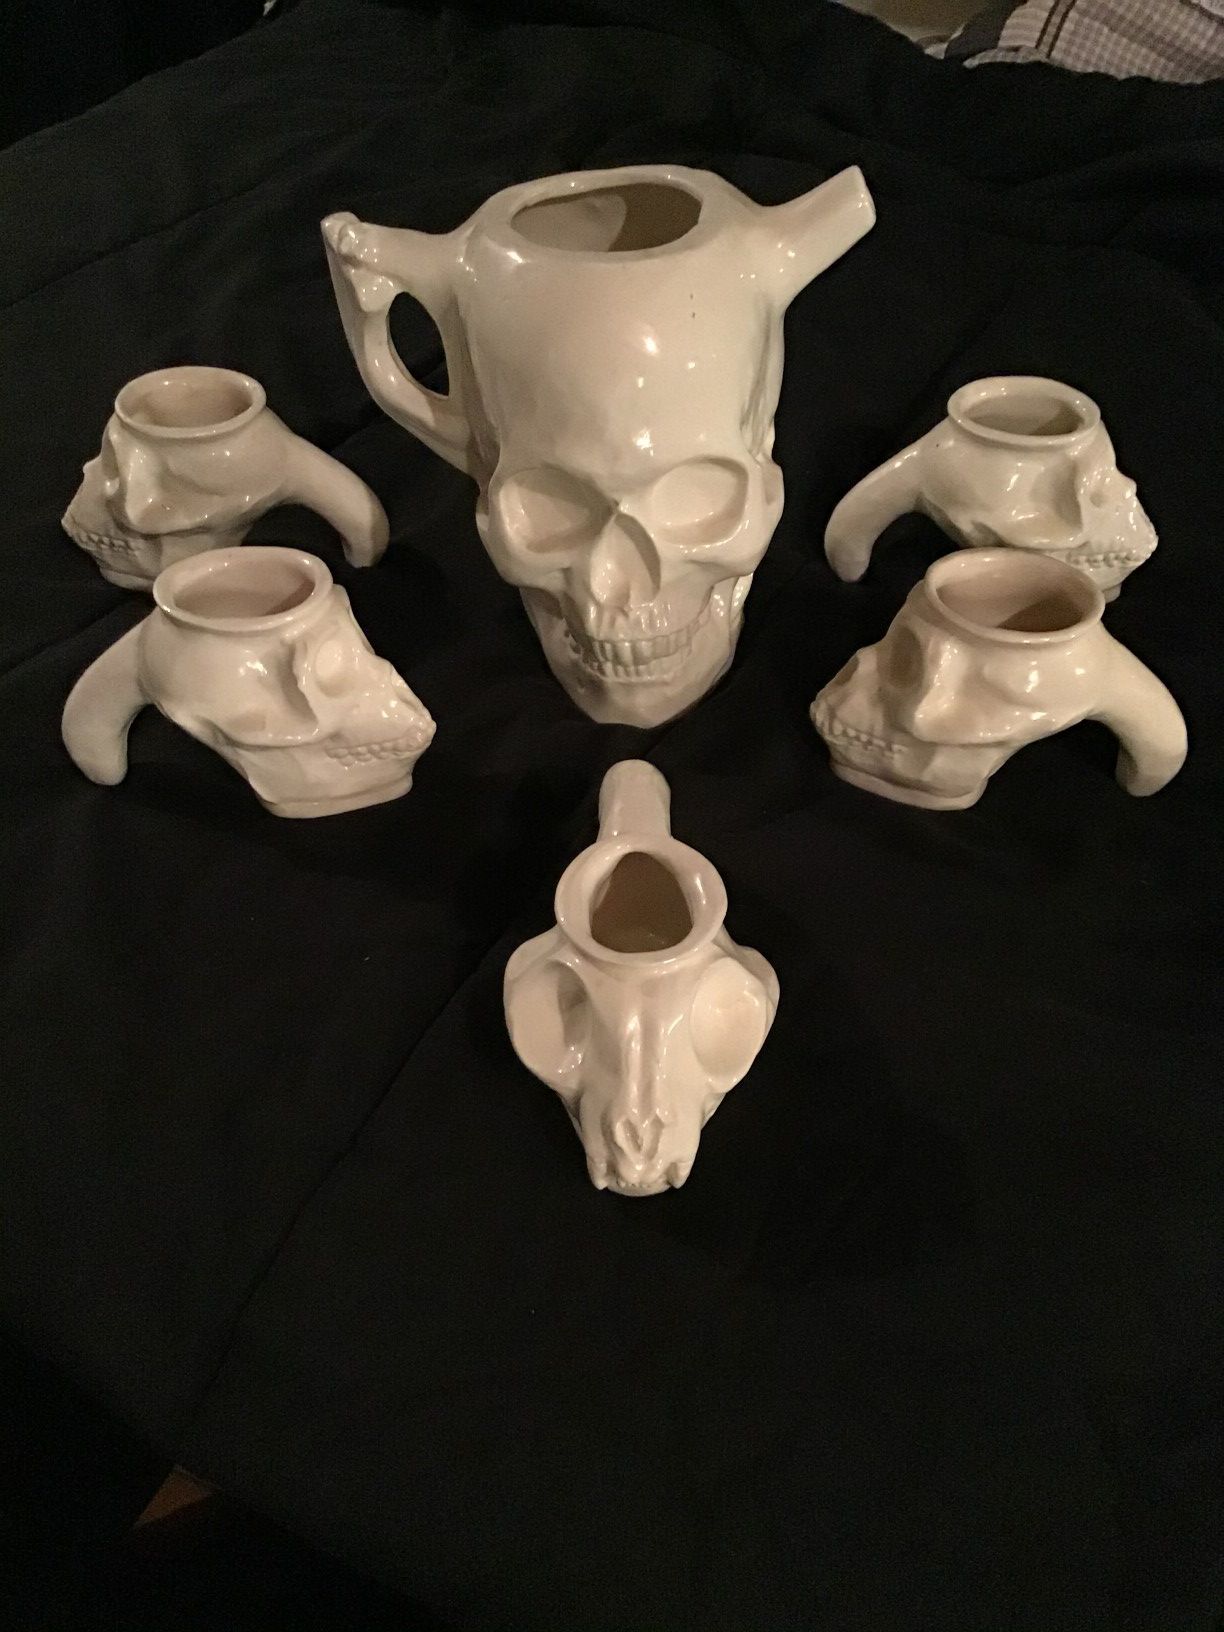 Halloween Bone China Skull Teapot, Monkey Skull Cups, & Fossil Plate